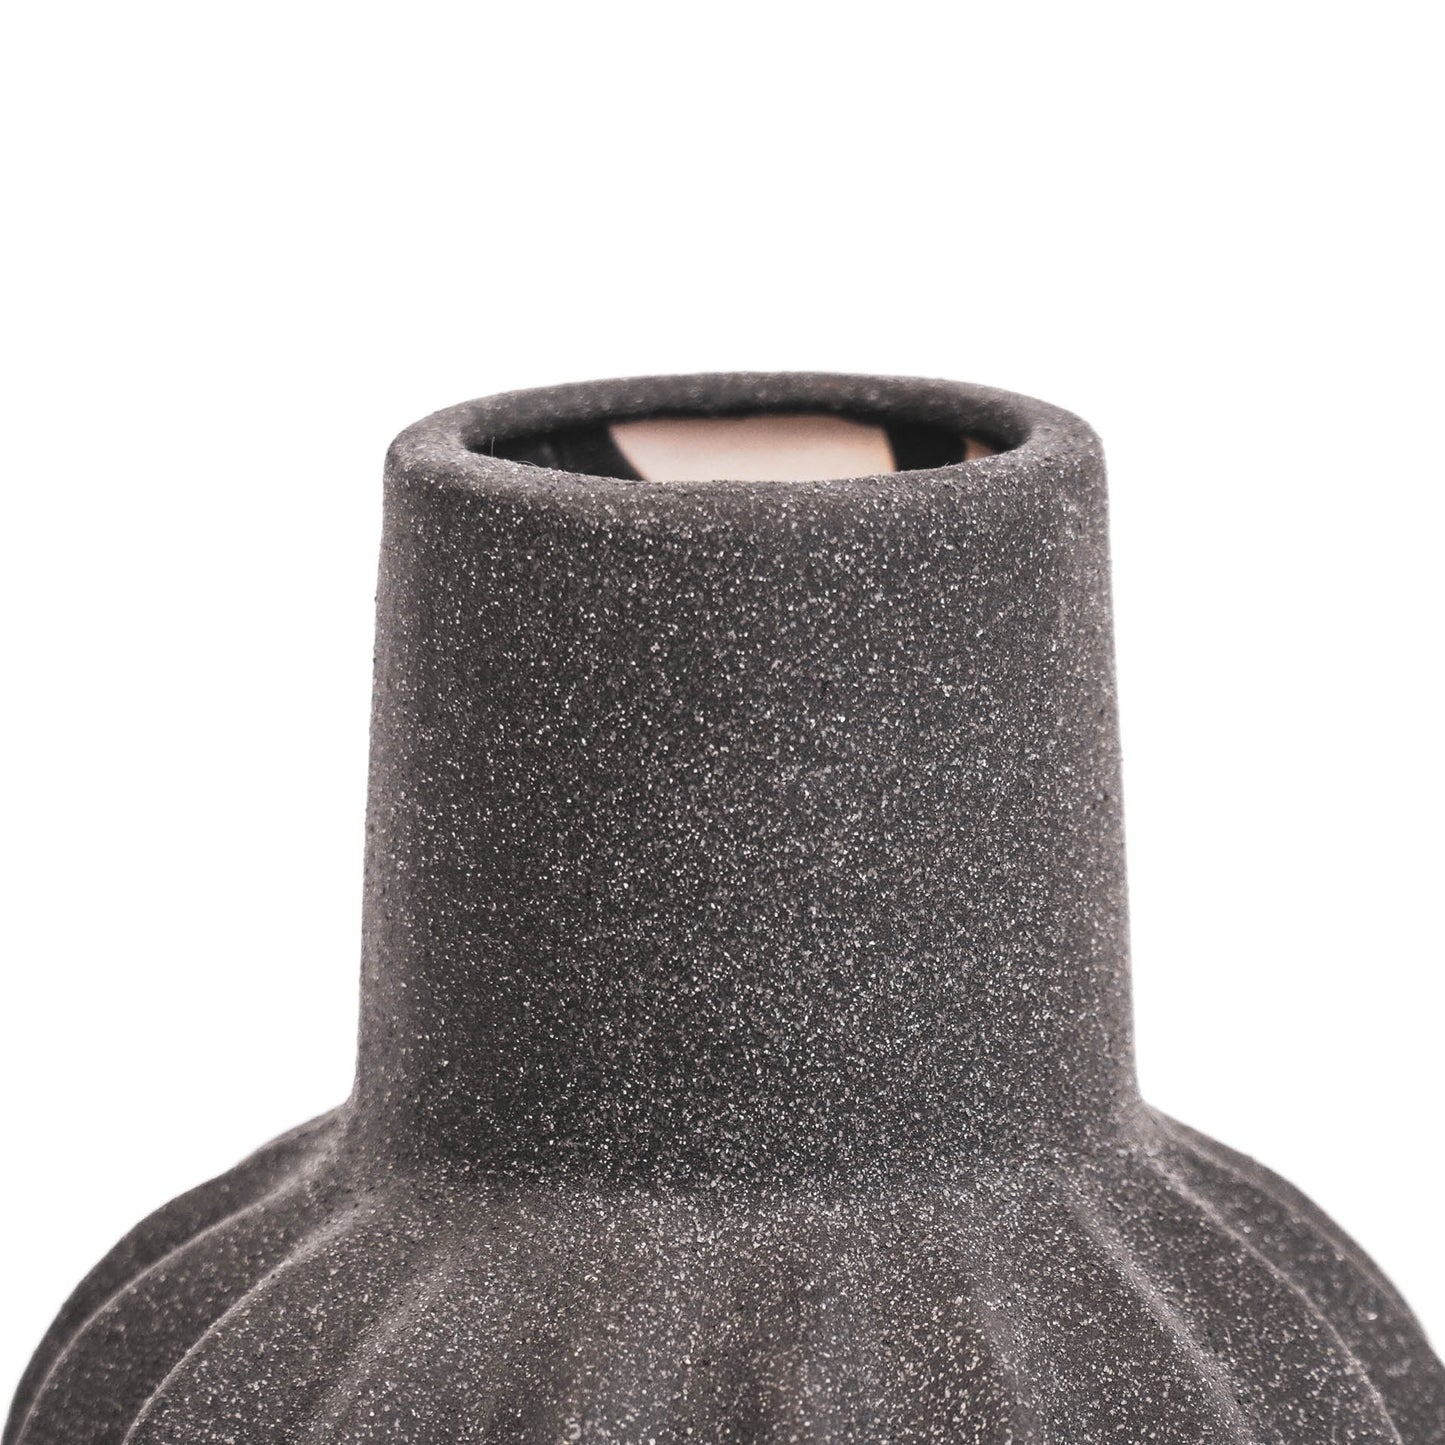 Housevitamin Organic Shape Vase - Black -15x15x24